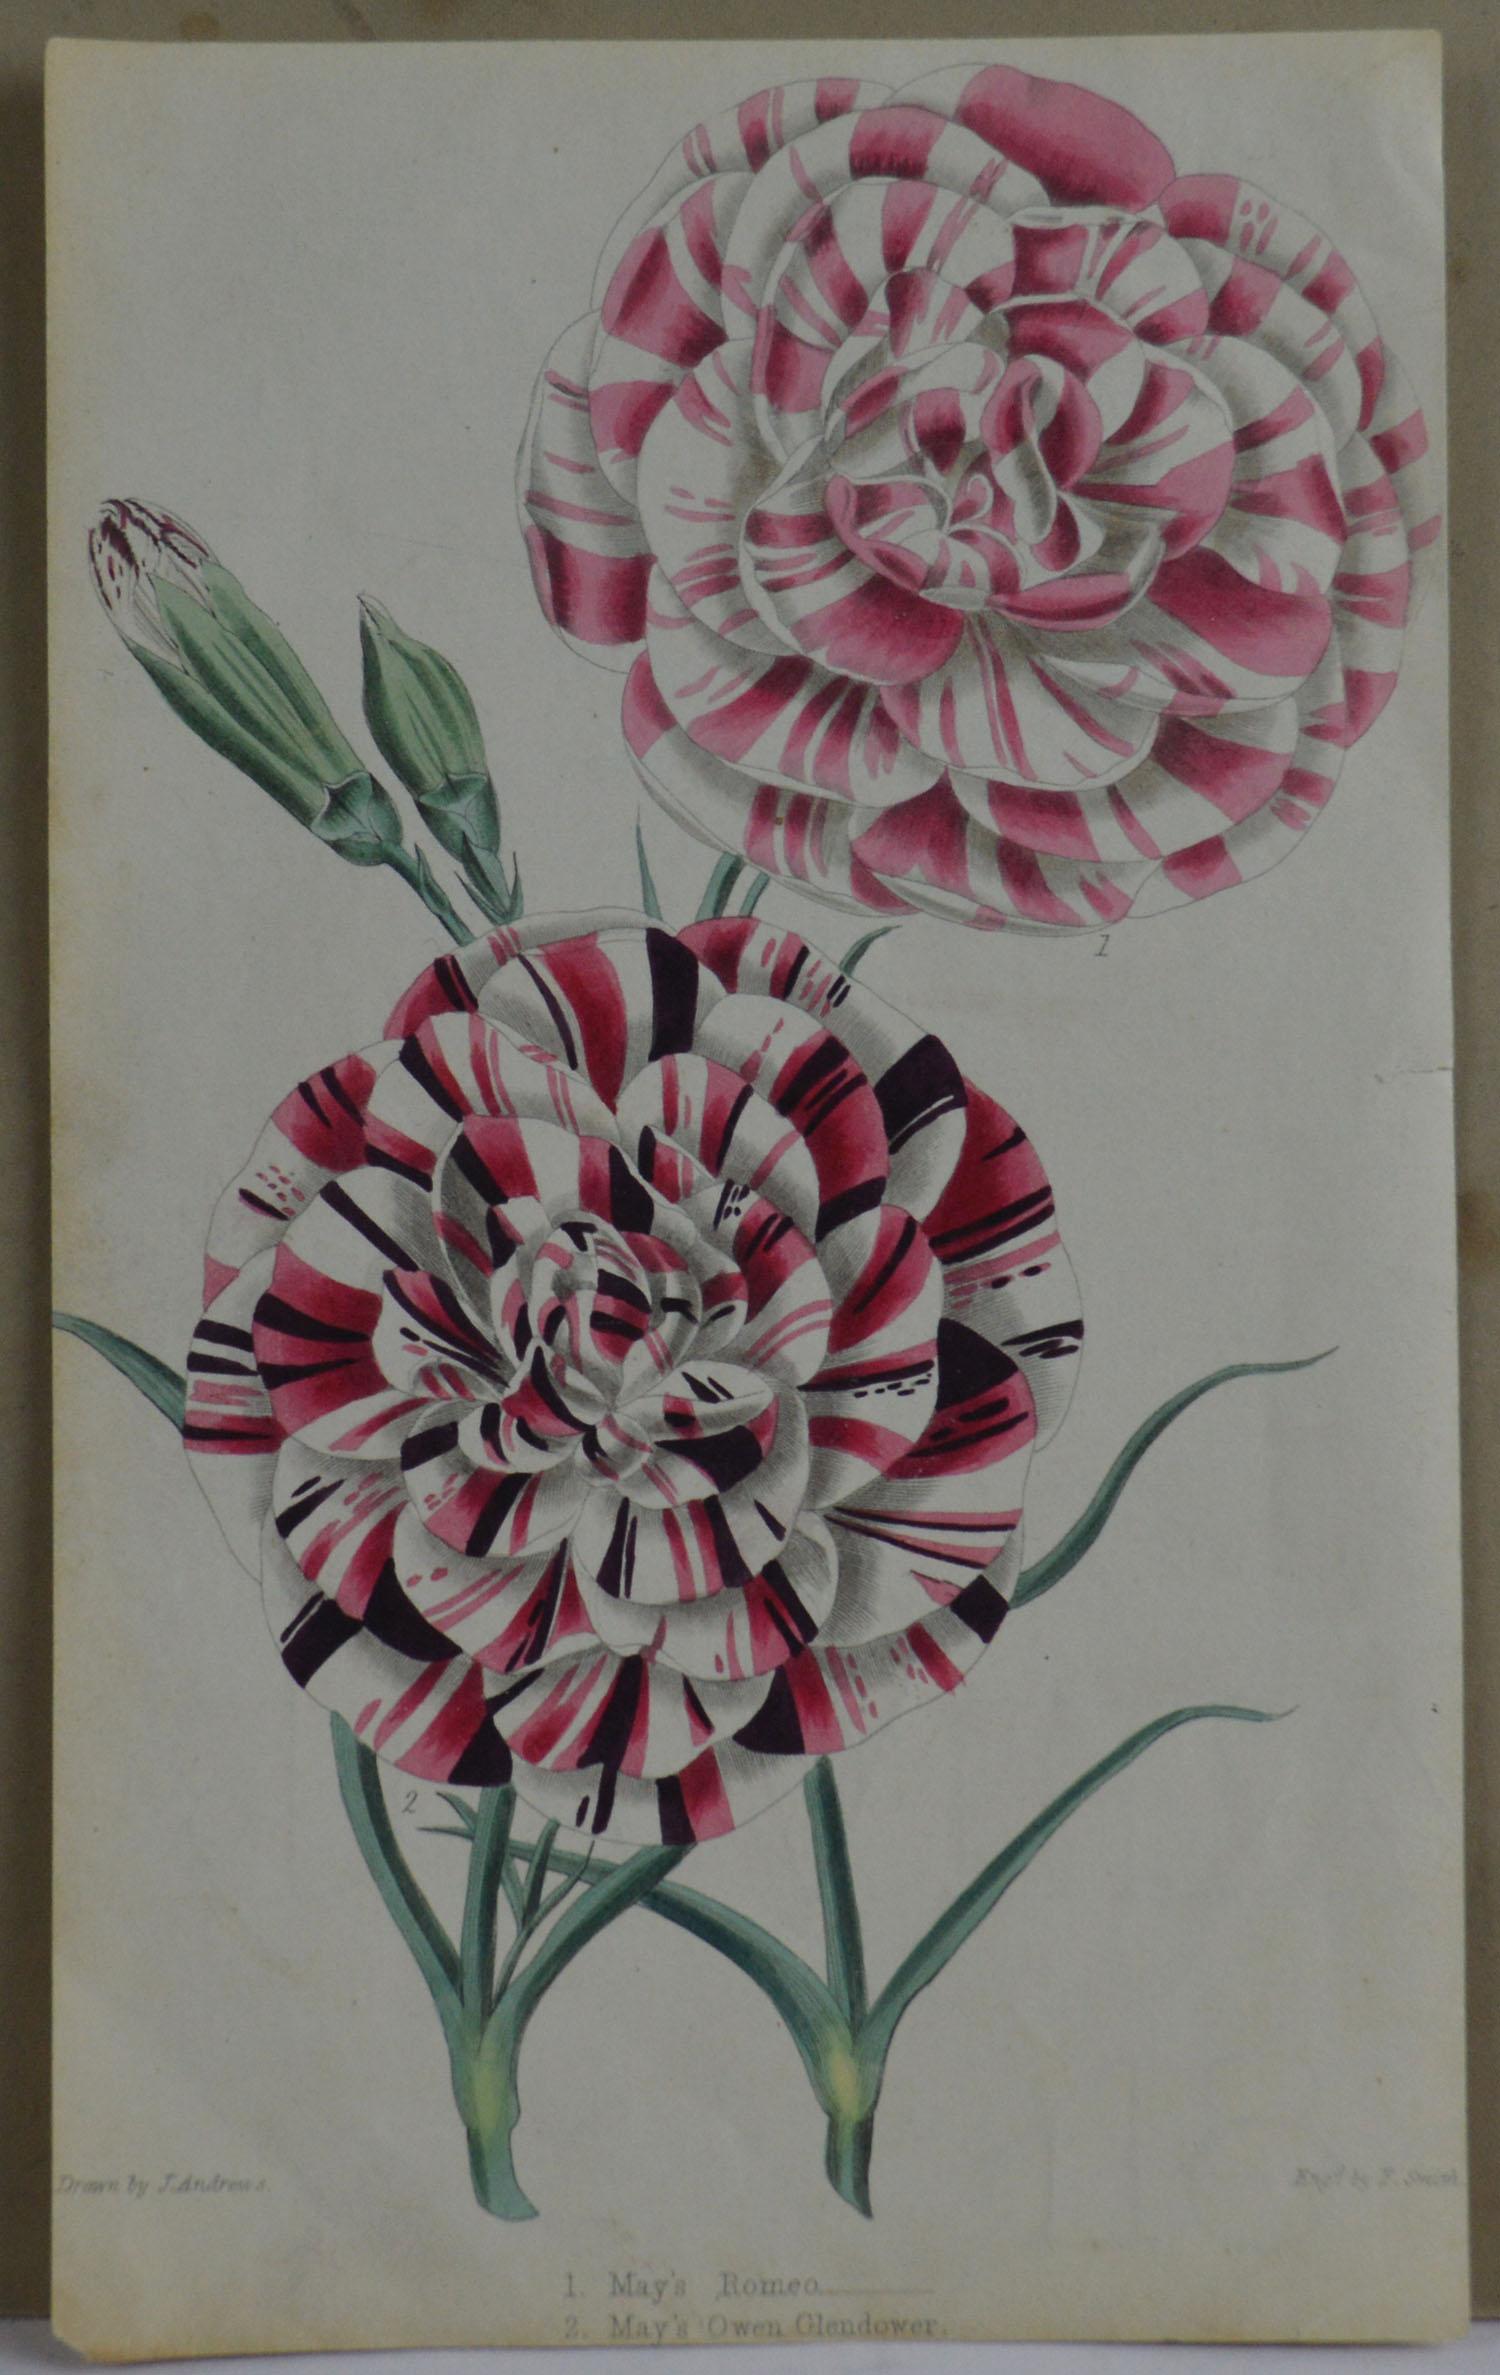 Chinese Export Original Antique Botanical Print May's Romeo, Unframed, circa 1850